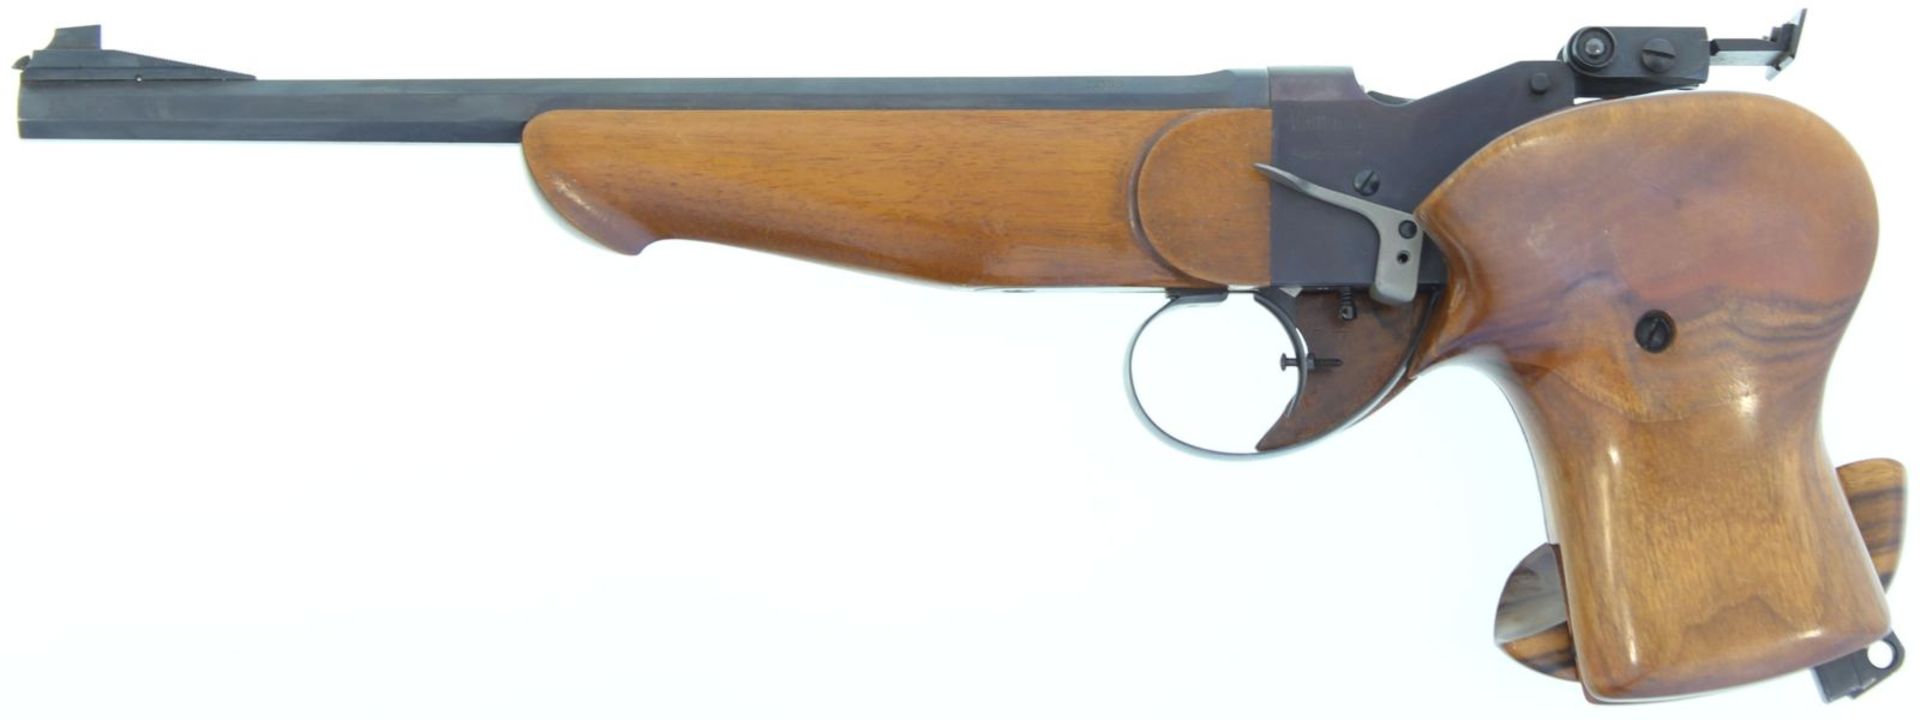 Matchpistole Hämmerli Mod.103, Kal. .22LR. Martini-Fallblocksystem mit fünffachem Stecher, brüniert.